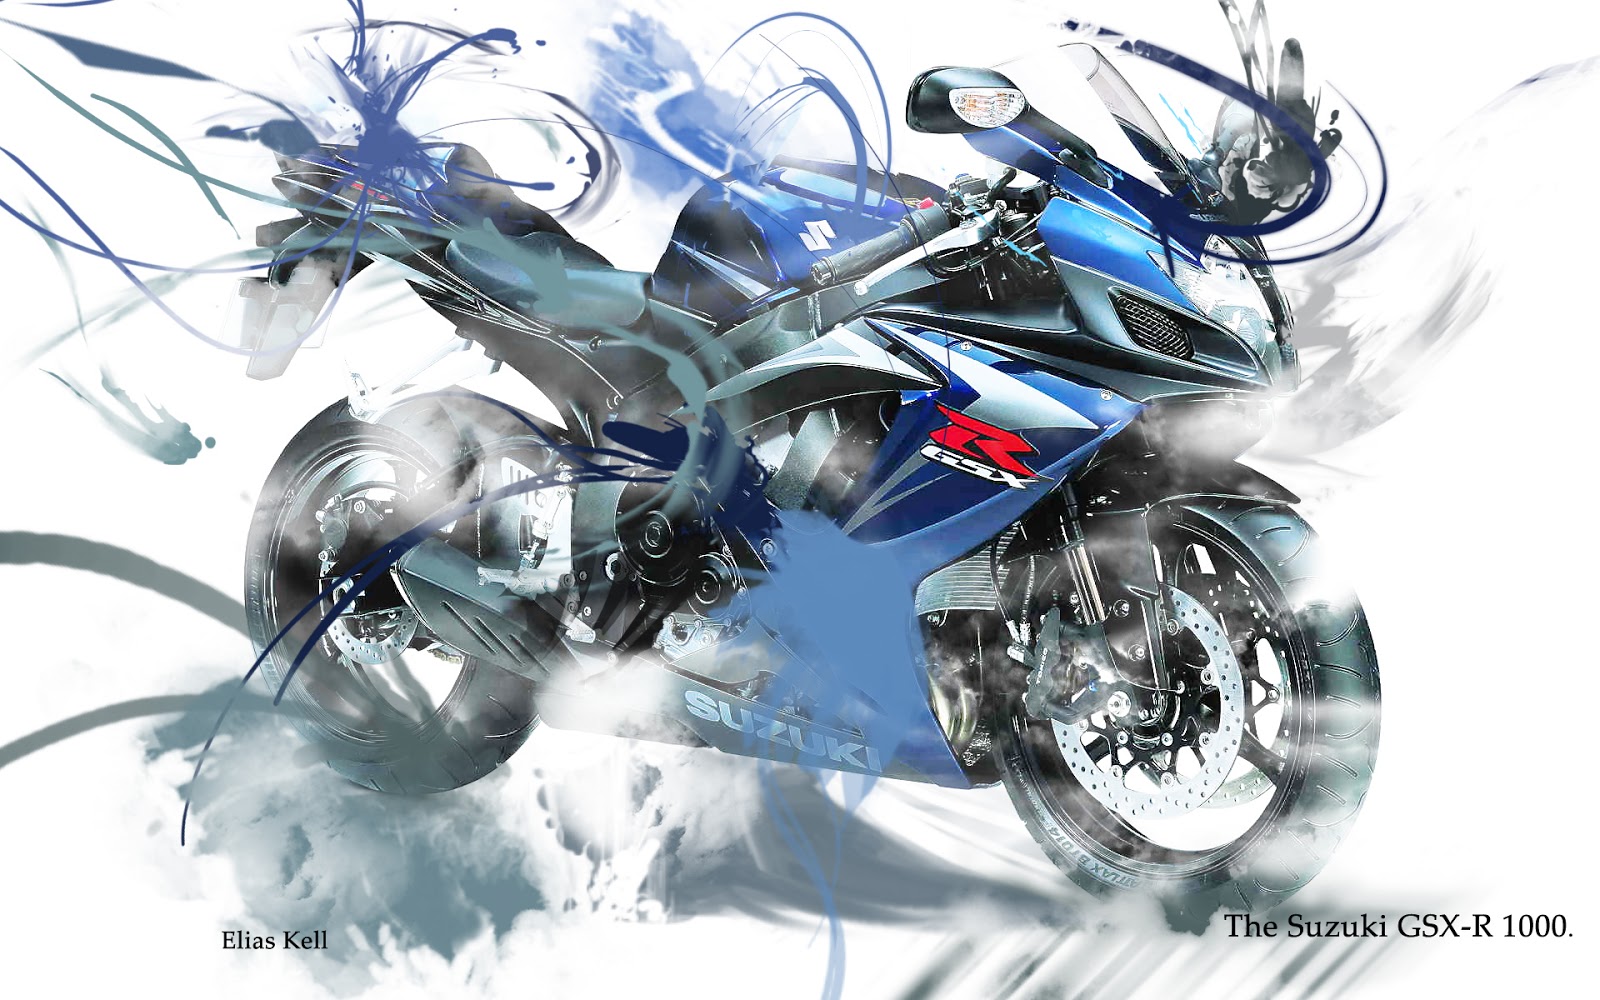 Luusama Motorcycle And Helmet News Suzuki Gsx R1000 Animation